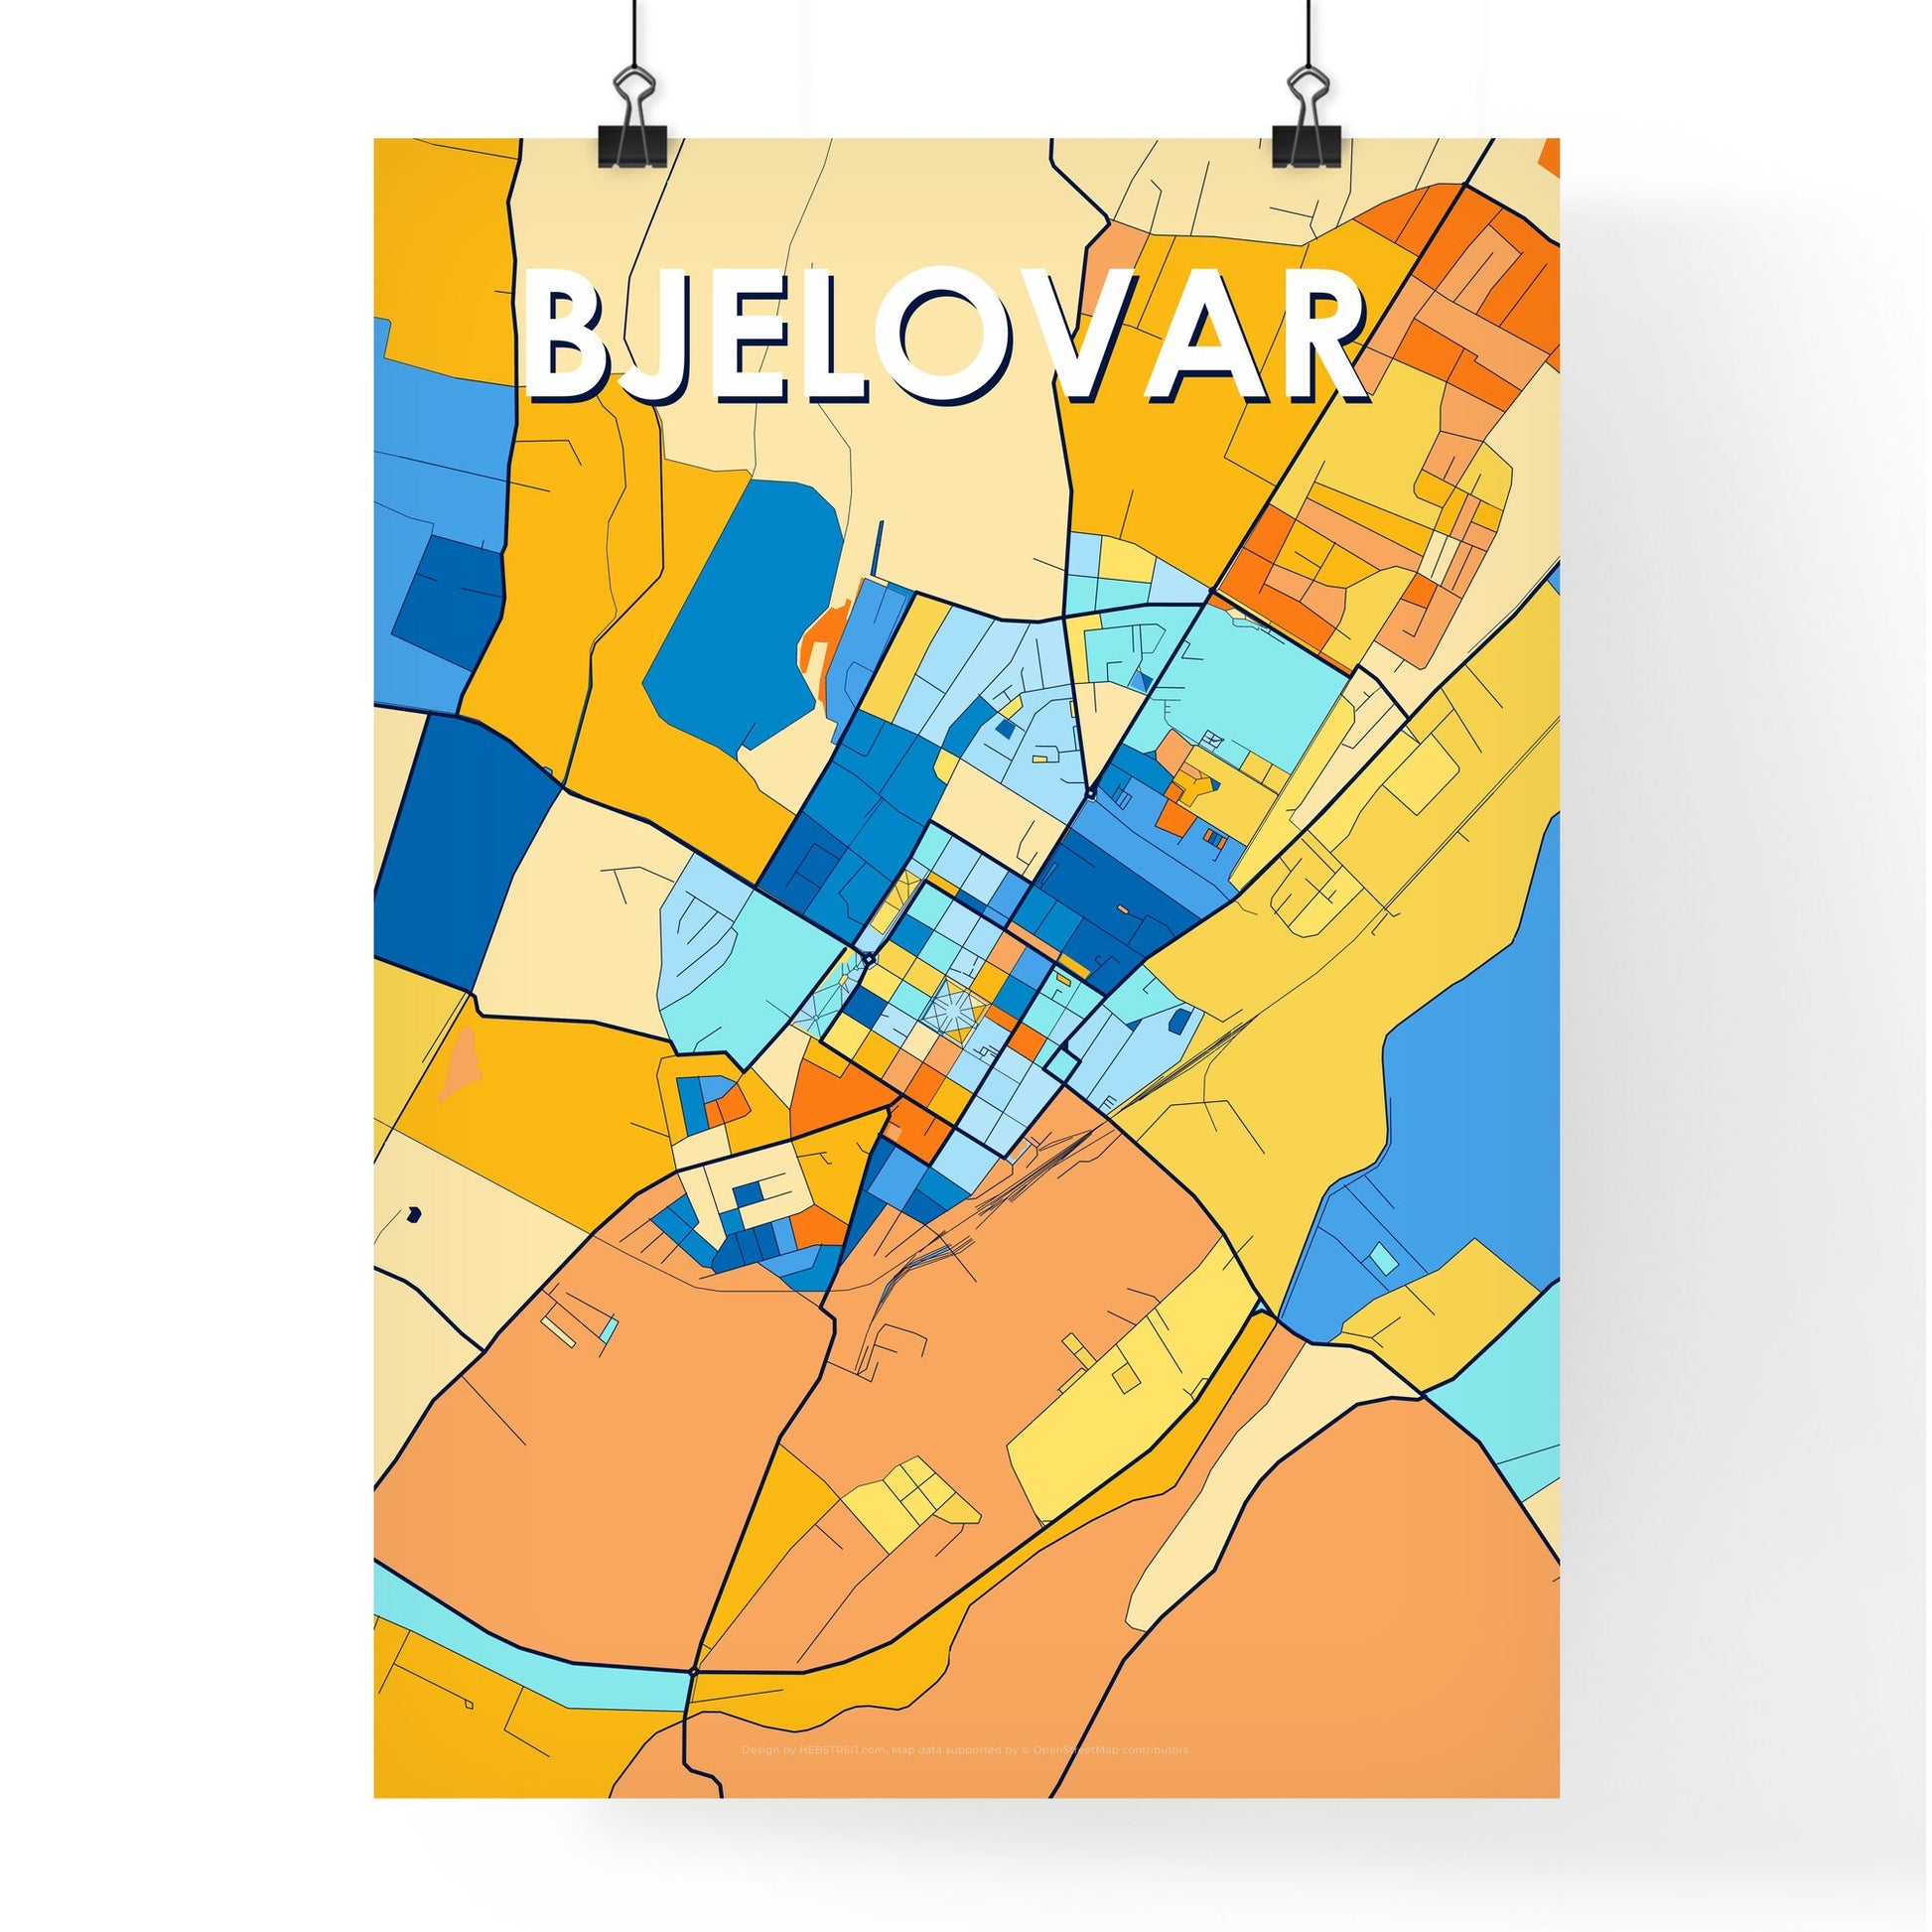 BJELOVAR CROATIA Vibrant Colorful Art Map Poster Blue Orange